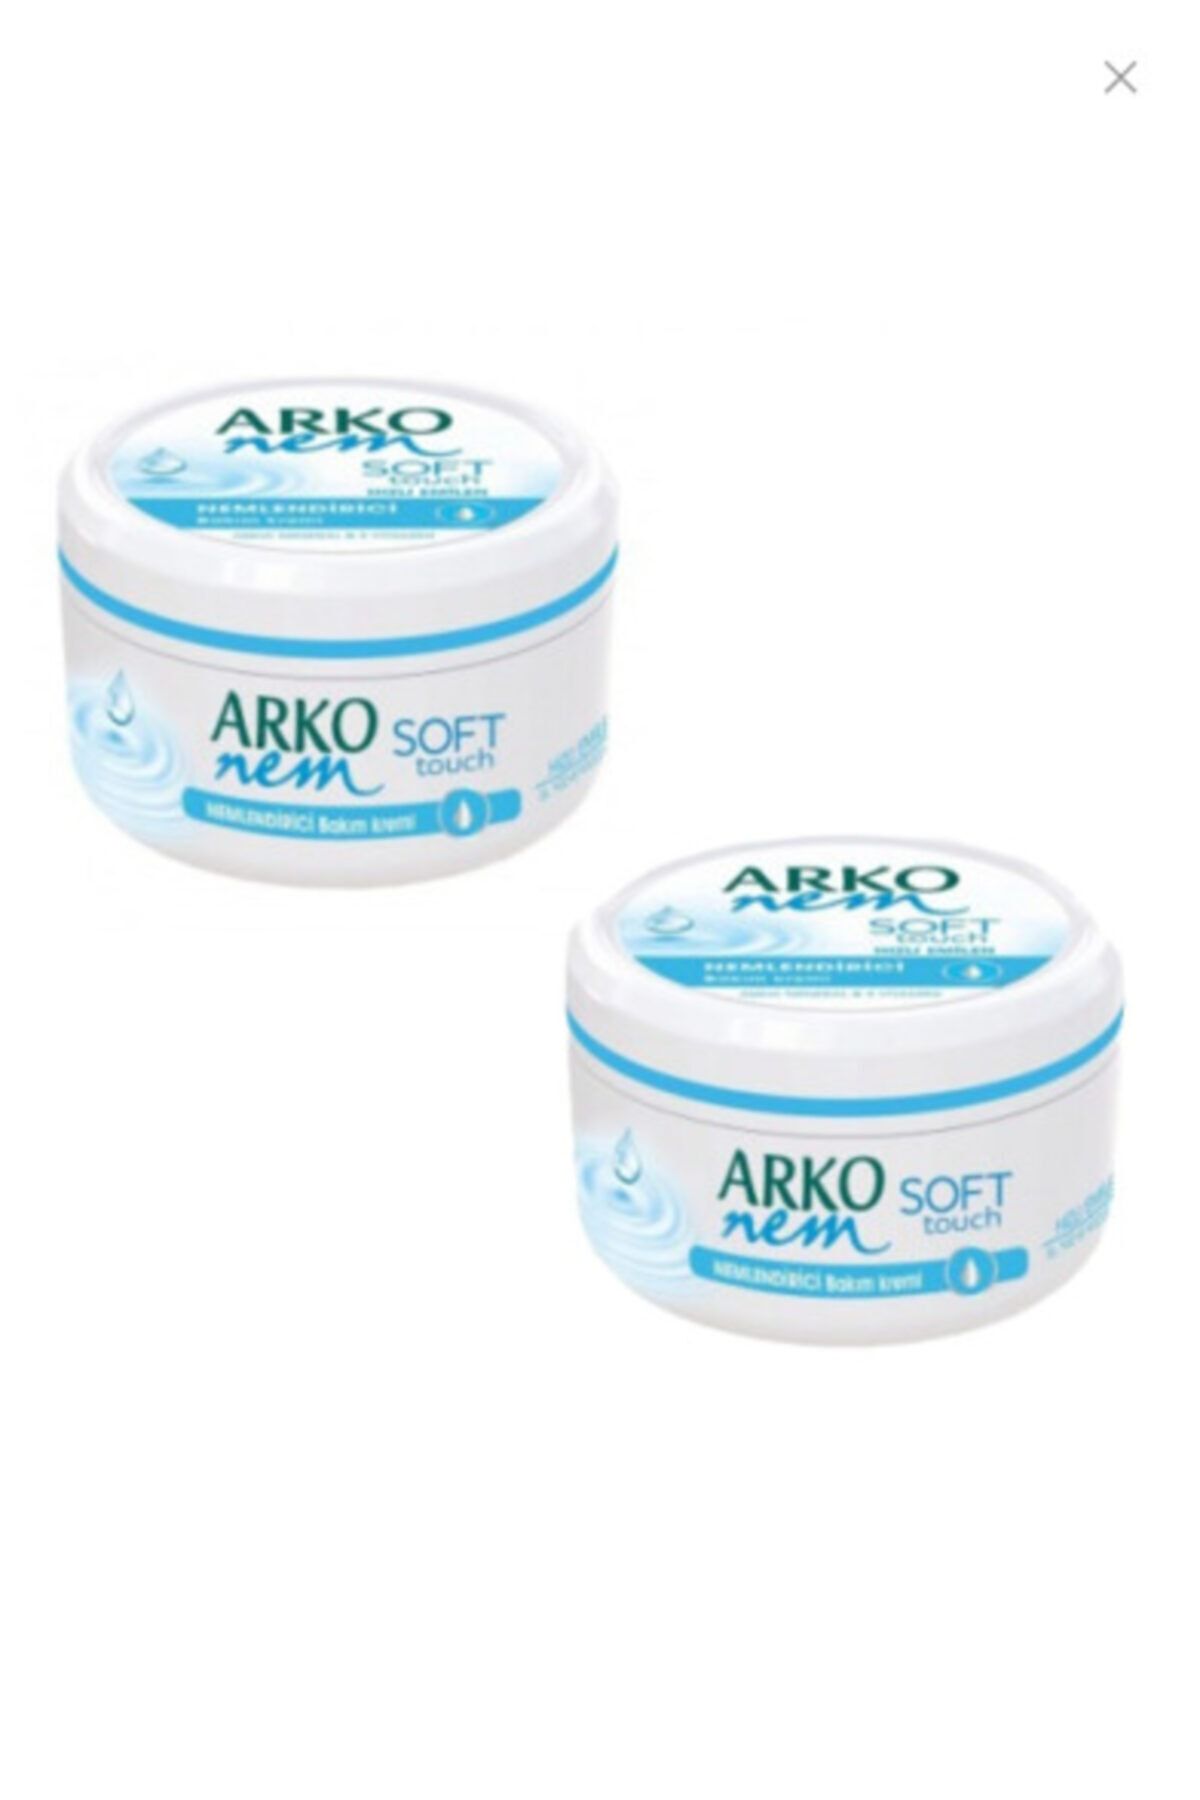 Arko Nem Soft Touch Nemlendirici Krem 200 ml 2 Adet